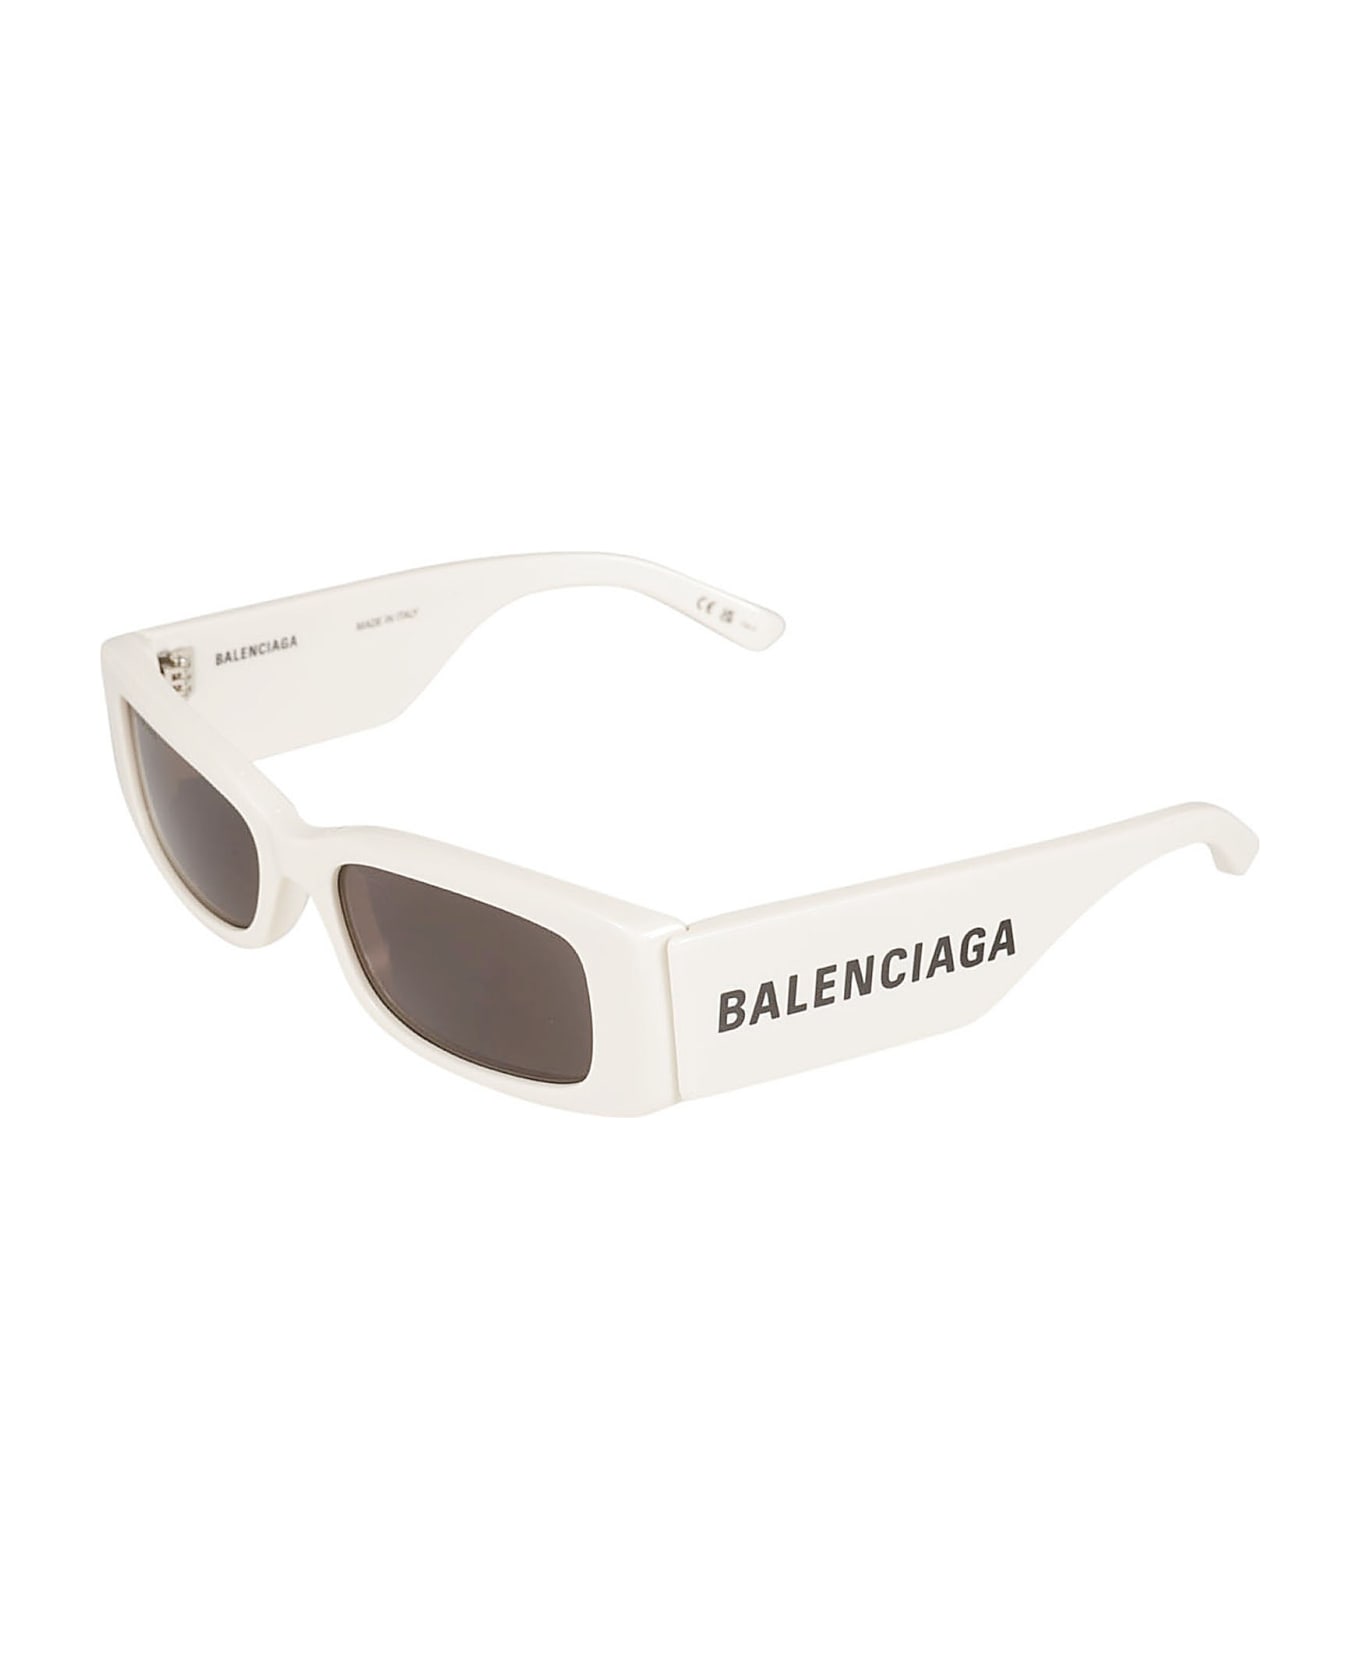 Balenciaga Eyewear Logo Sided Rectangular Frame Sunglasses - White/Grey サングラス